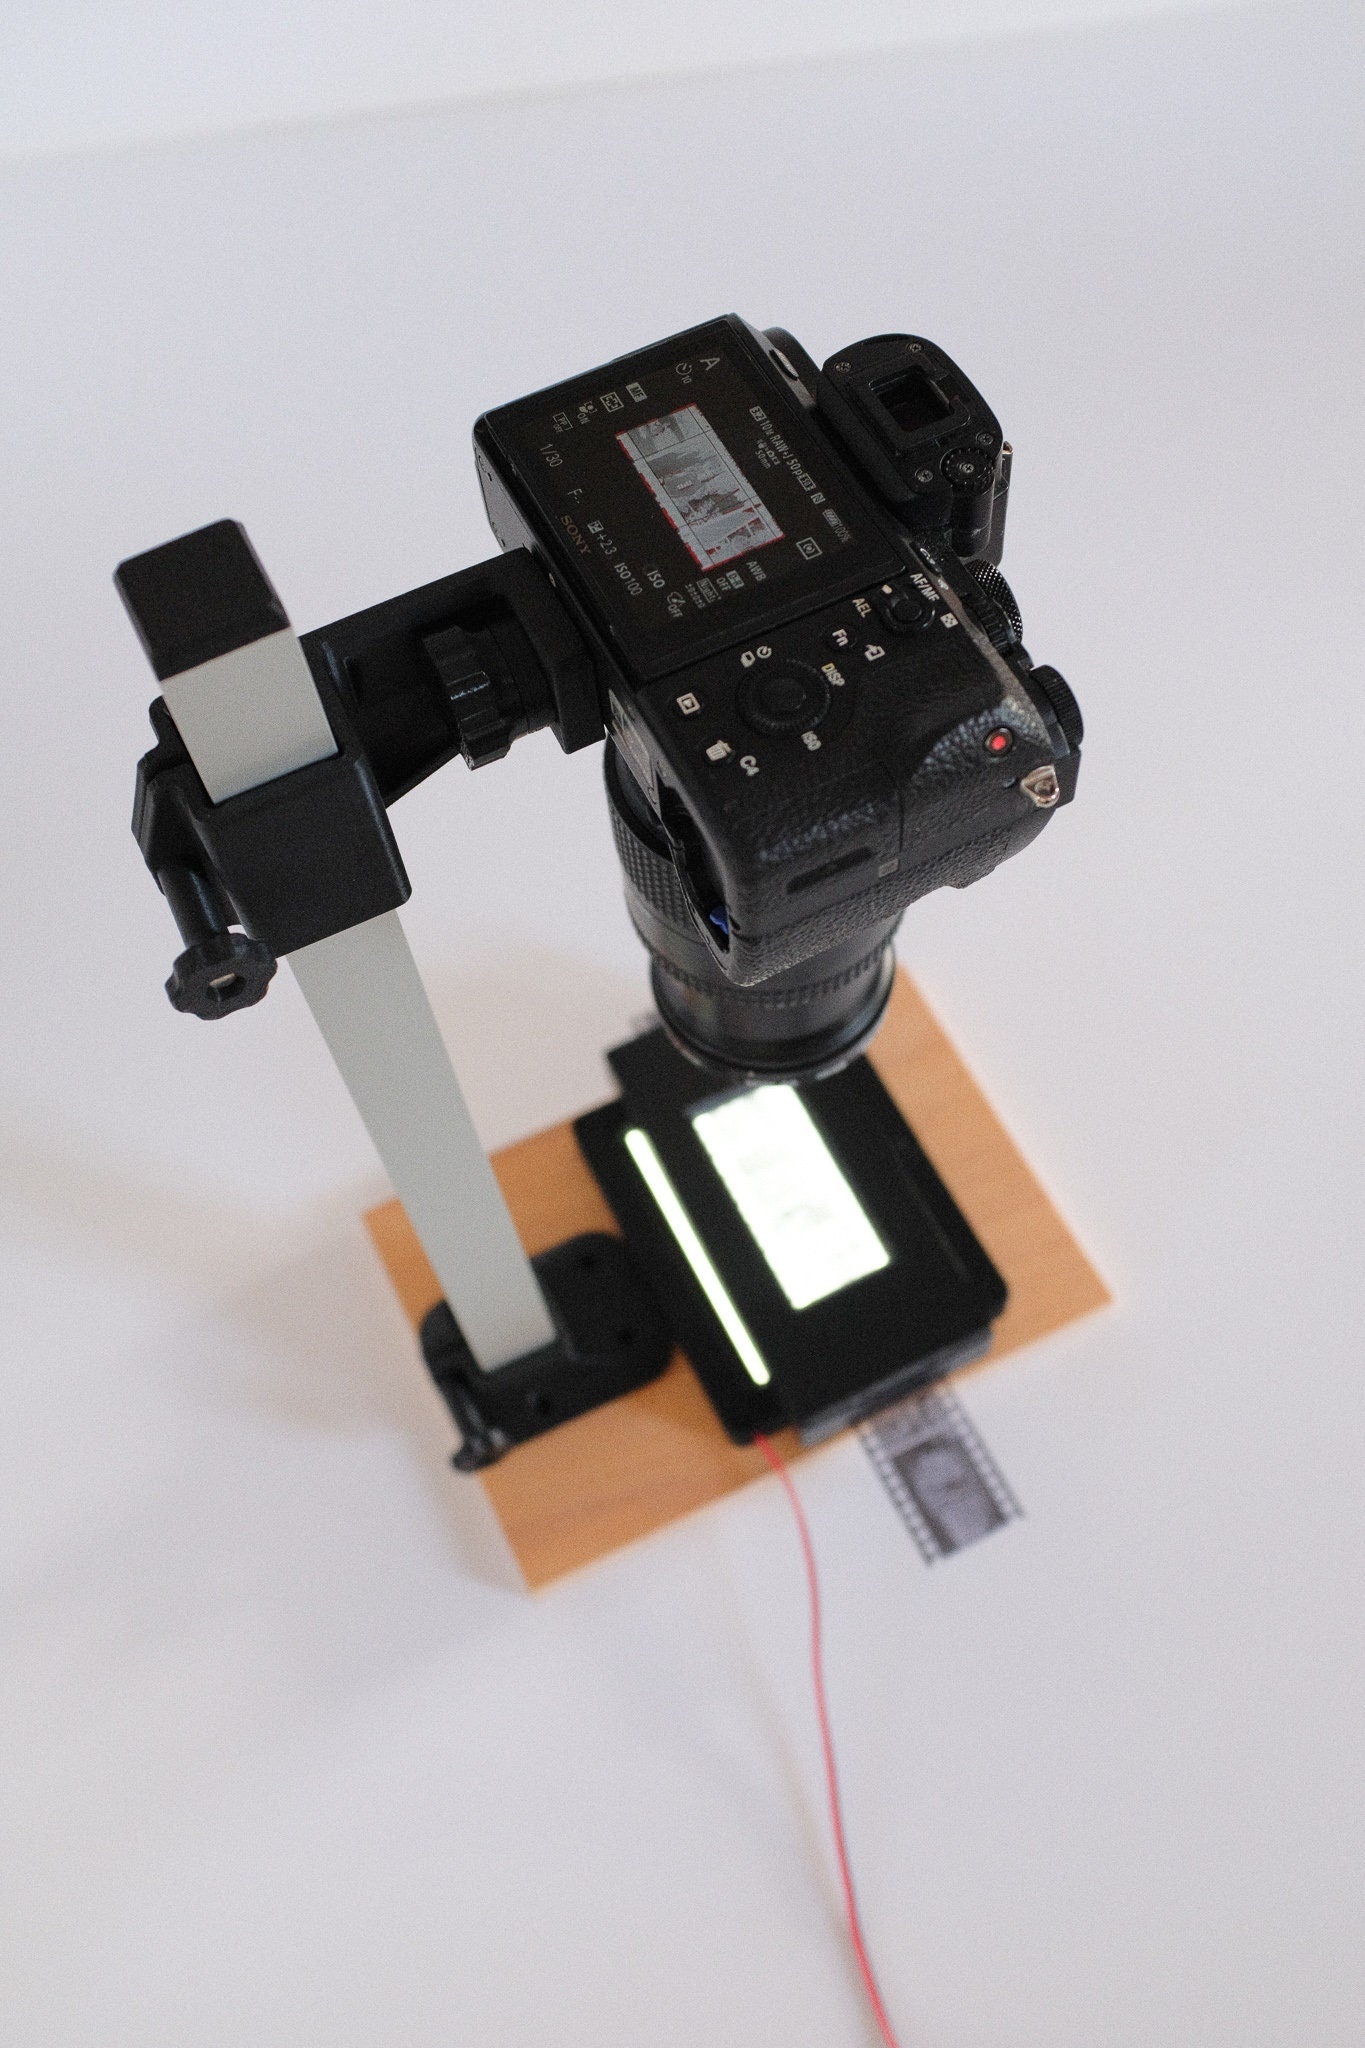 Complete 35mm DSLR Scanning Kit: Camera Copy Stand, 35mm Carrier, and LED Light Panel (+97 CRI)